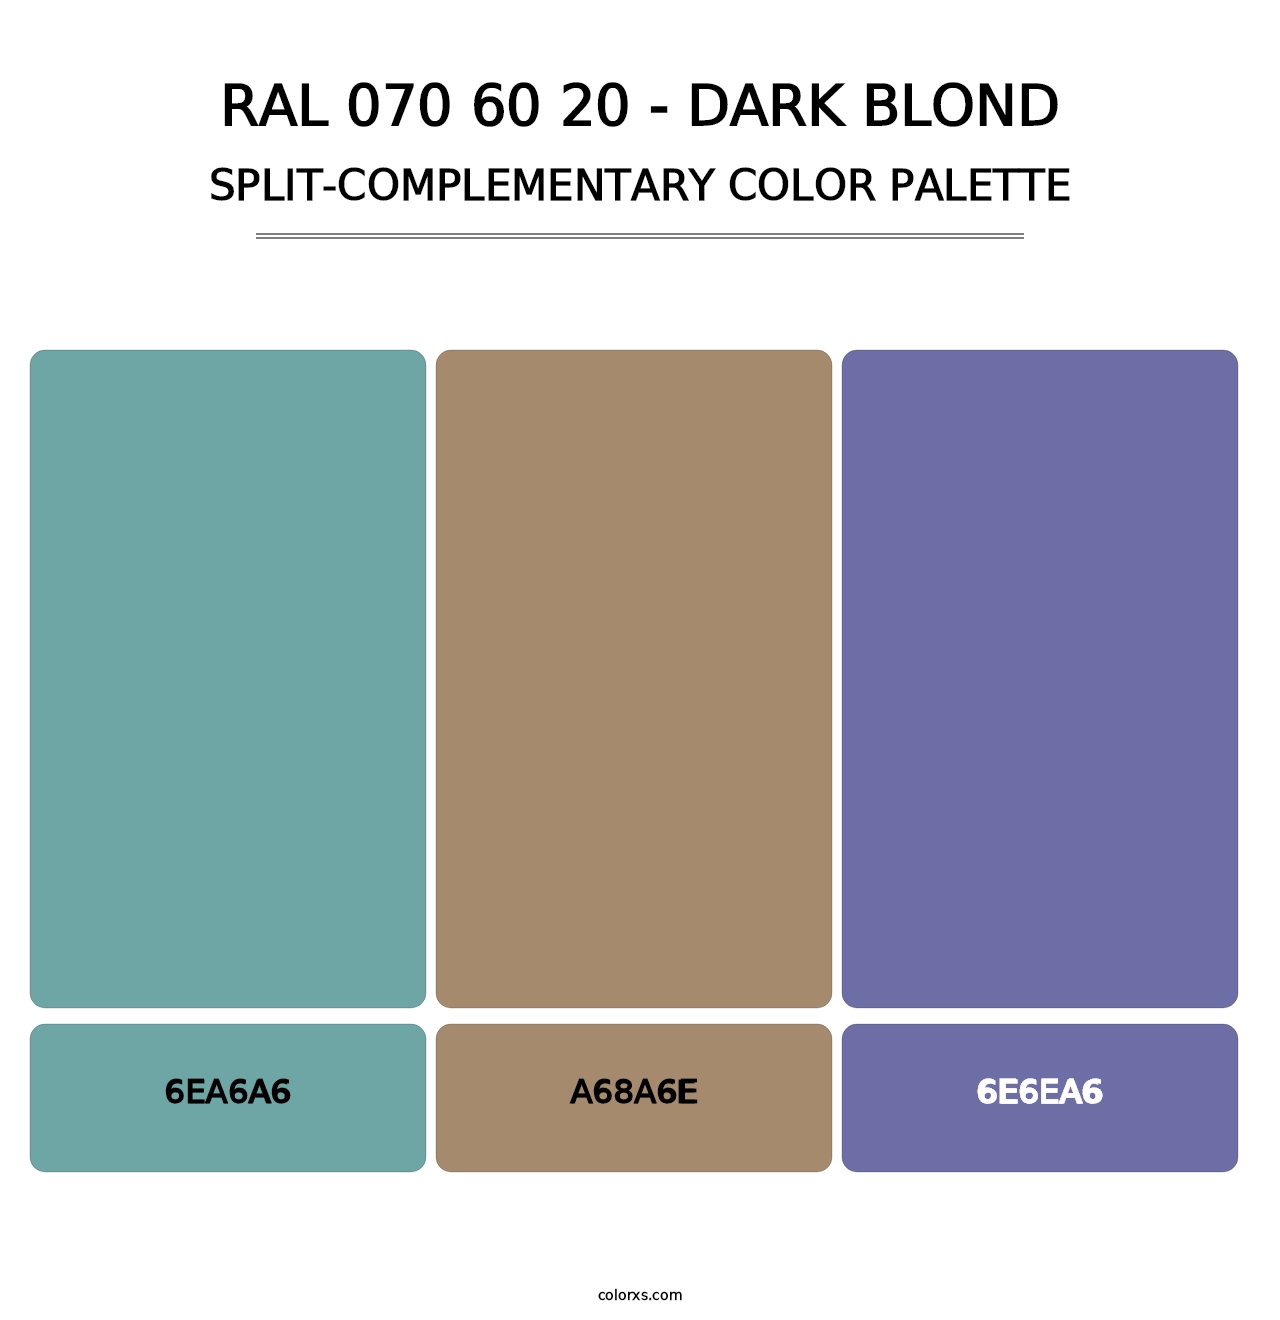 RAL 070 60 20 - Dark Blond - Split-Complementary Color Palette